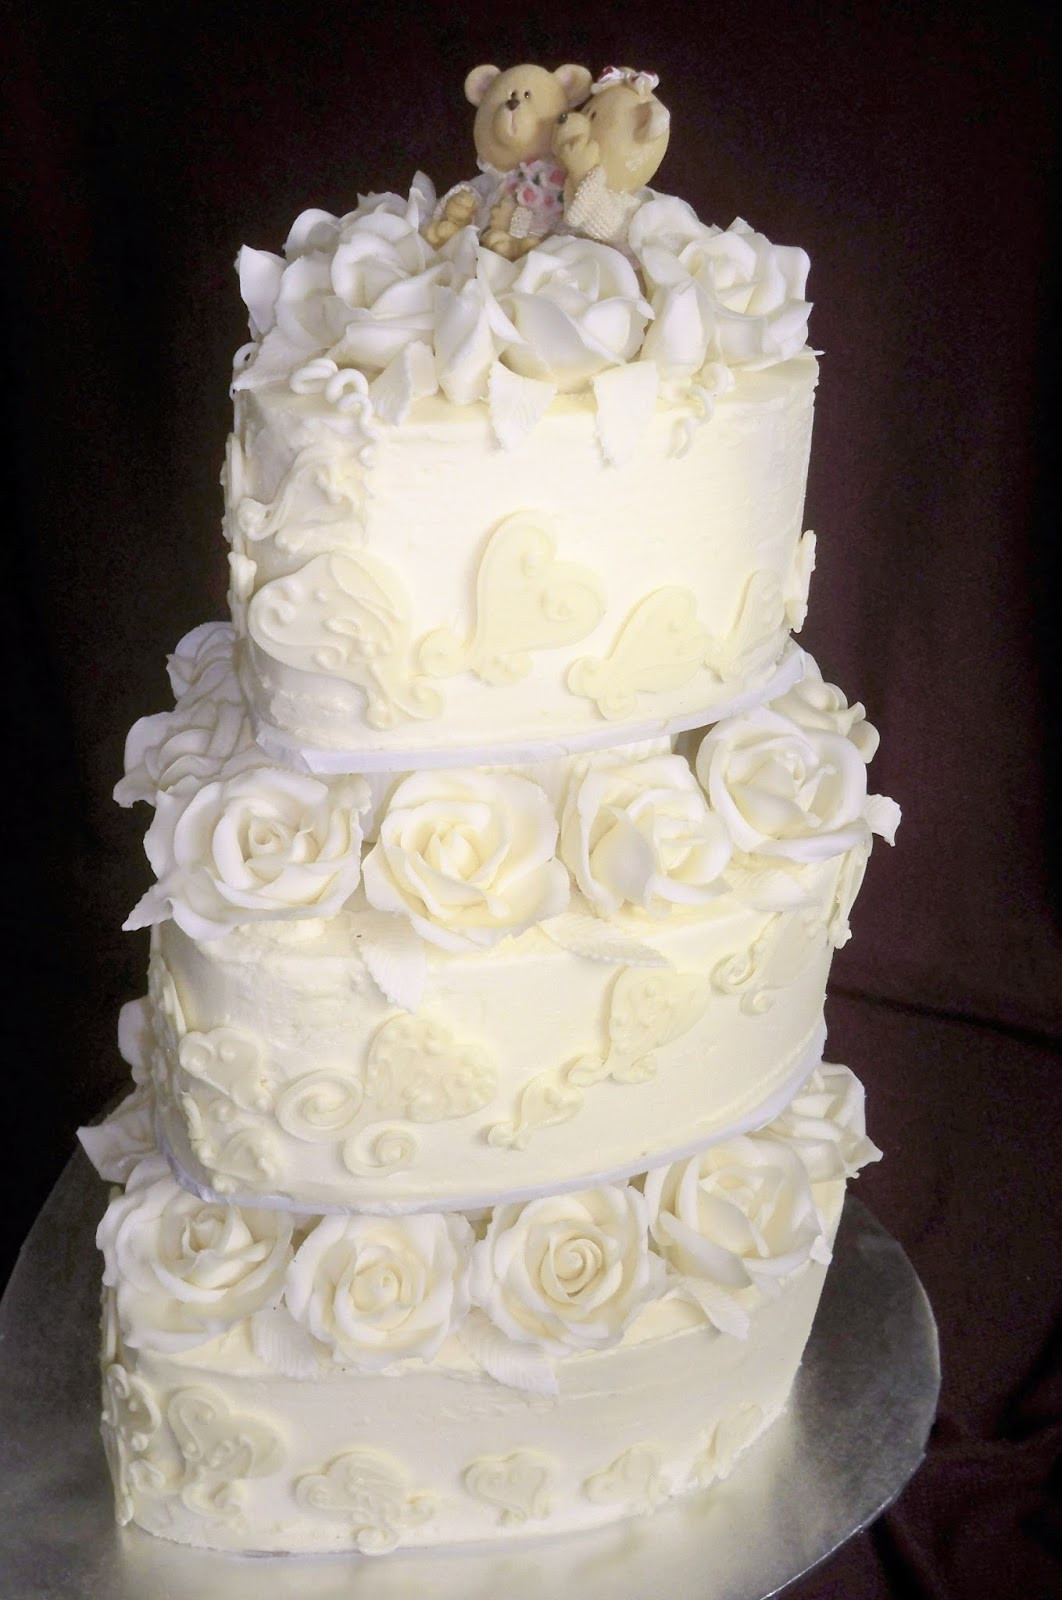 White Chocolate Wedding Cake
 Romantic white chocolate wedding cake